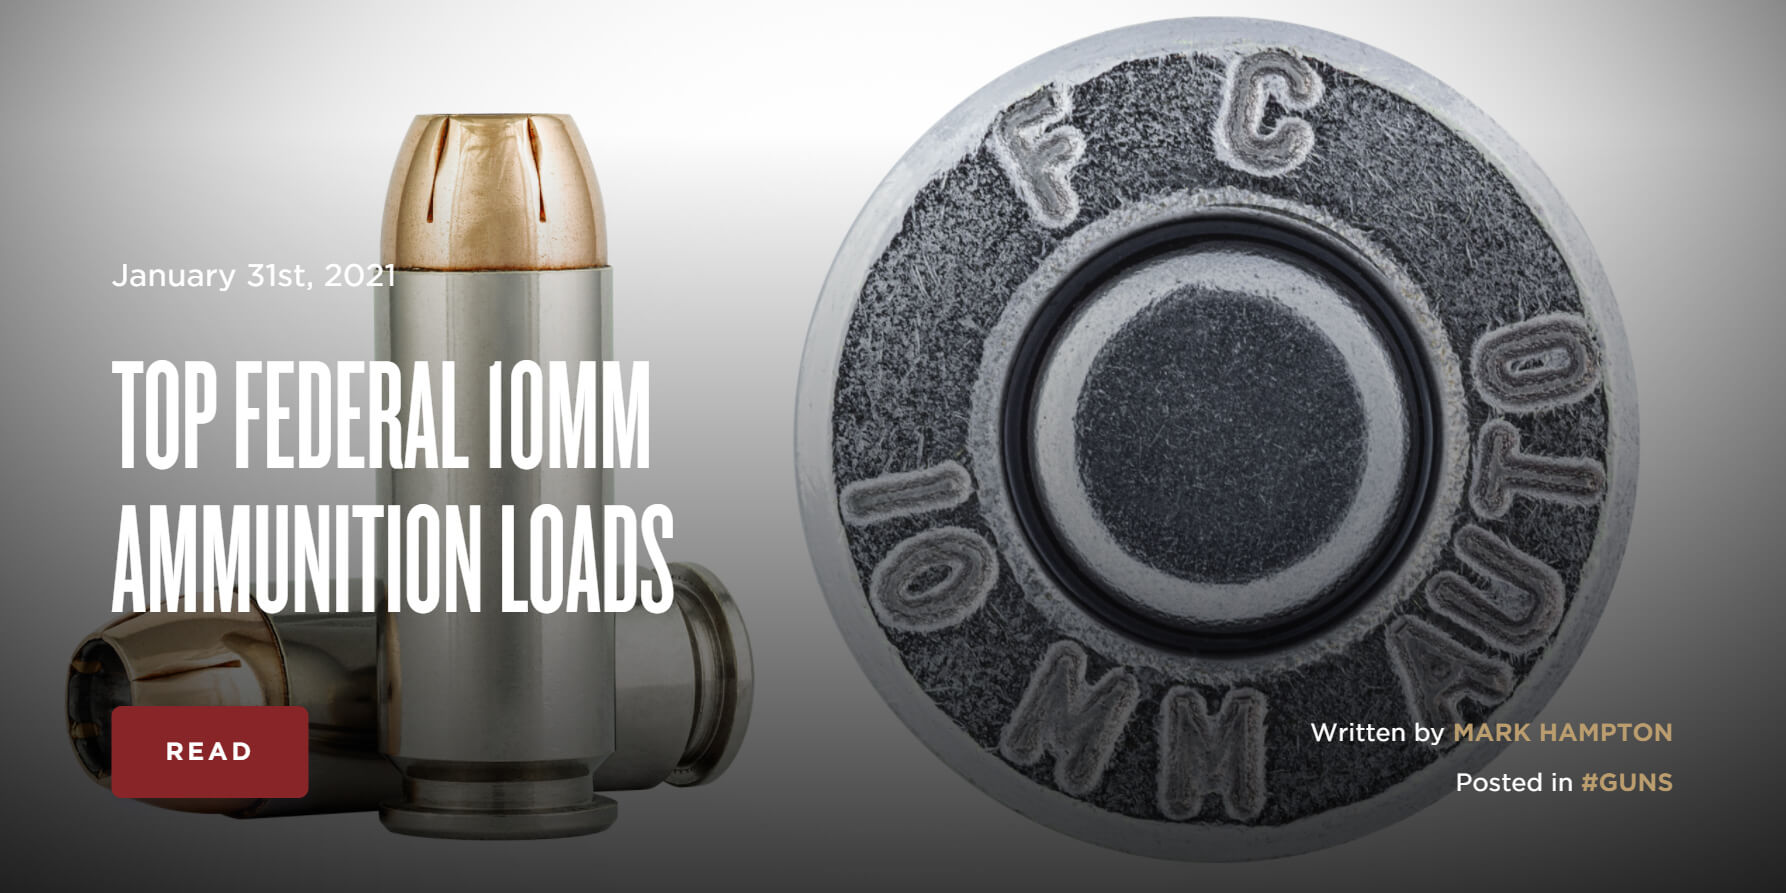 At øge bunker Myrde Top Federal 10mm Ammunition Loads | The Armory Life Forum